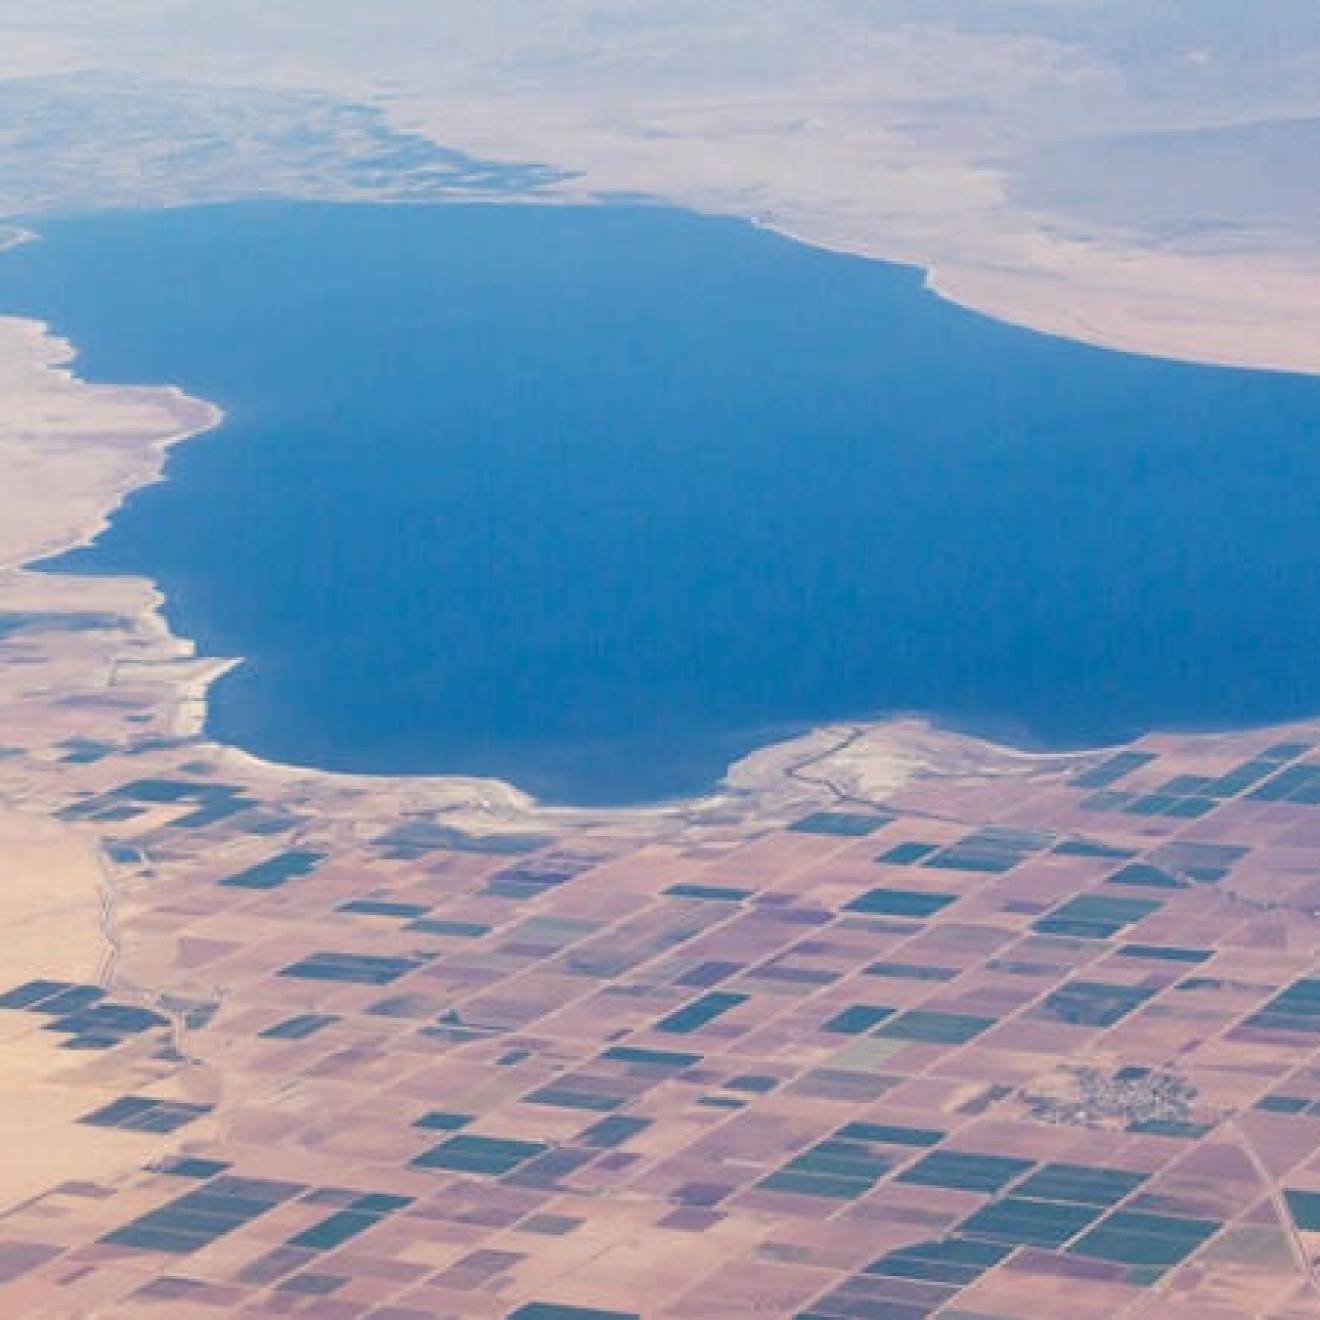 Salton Sea aerial view